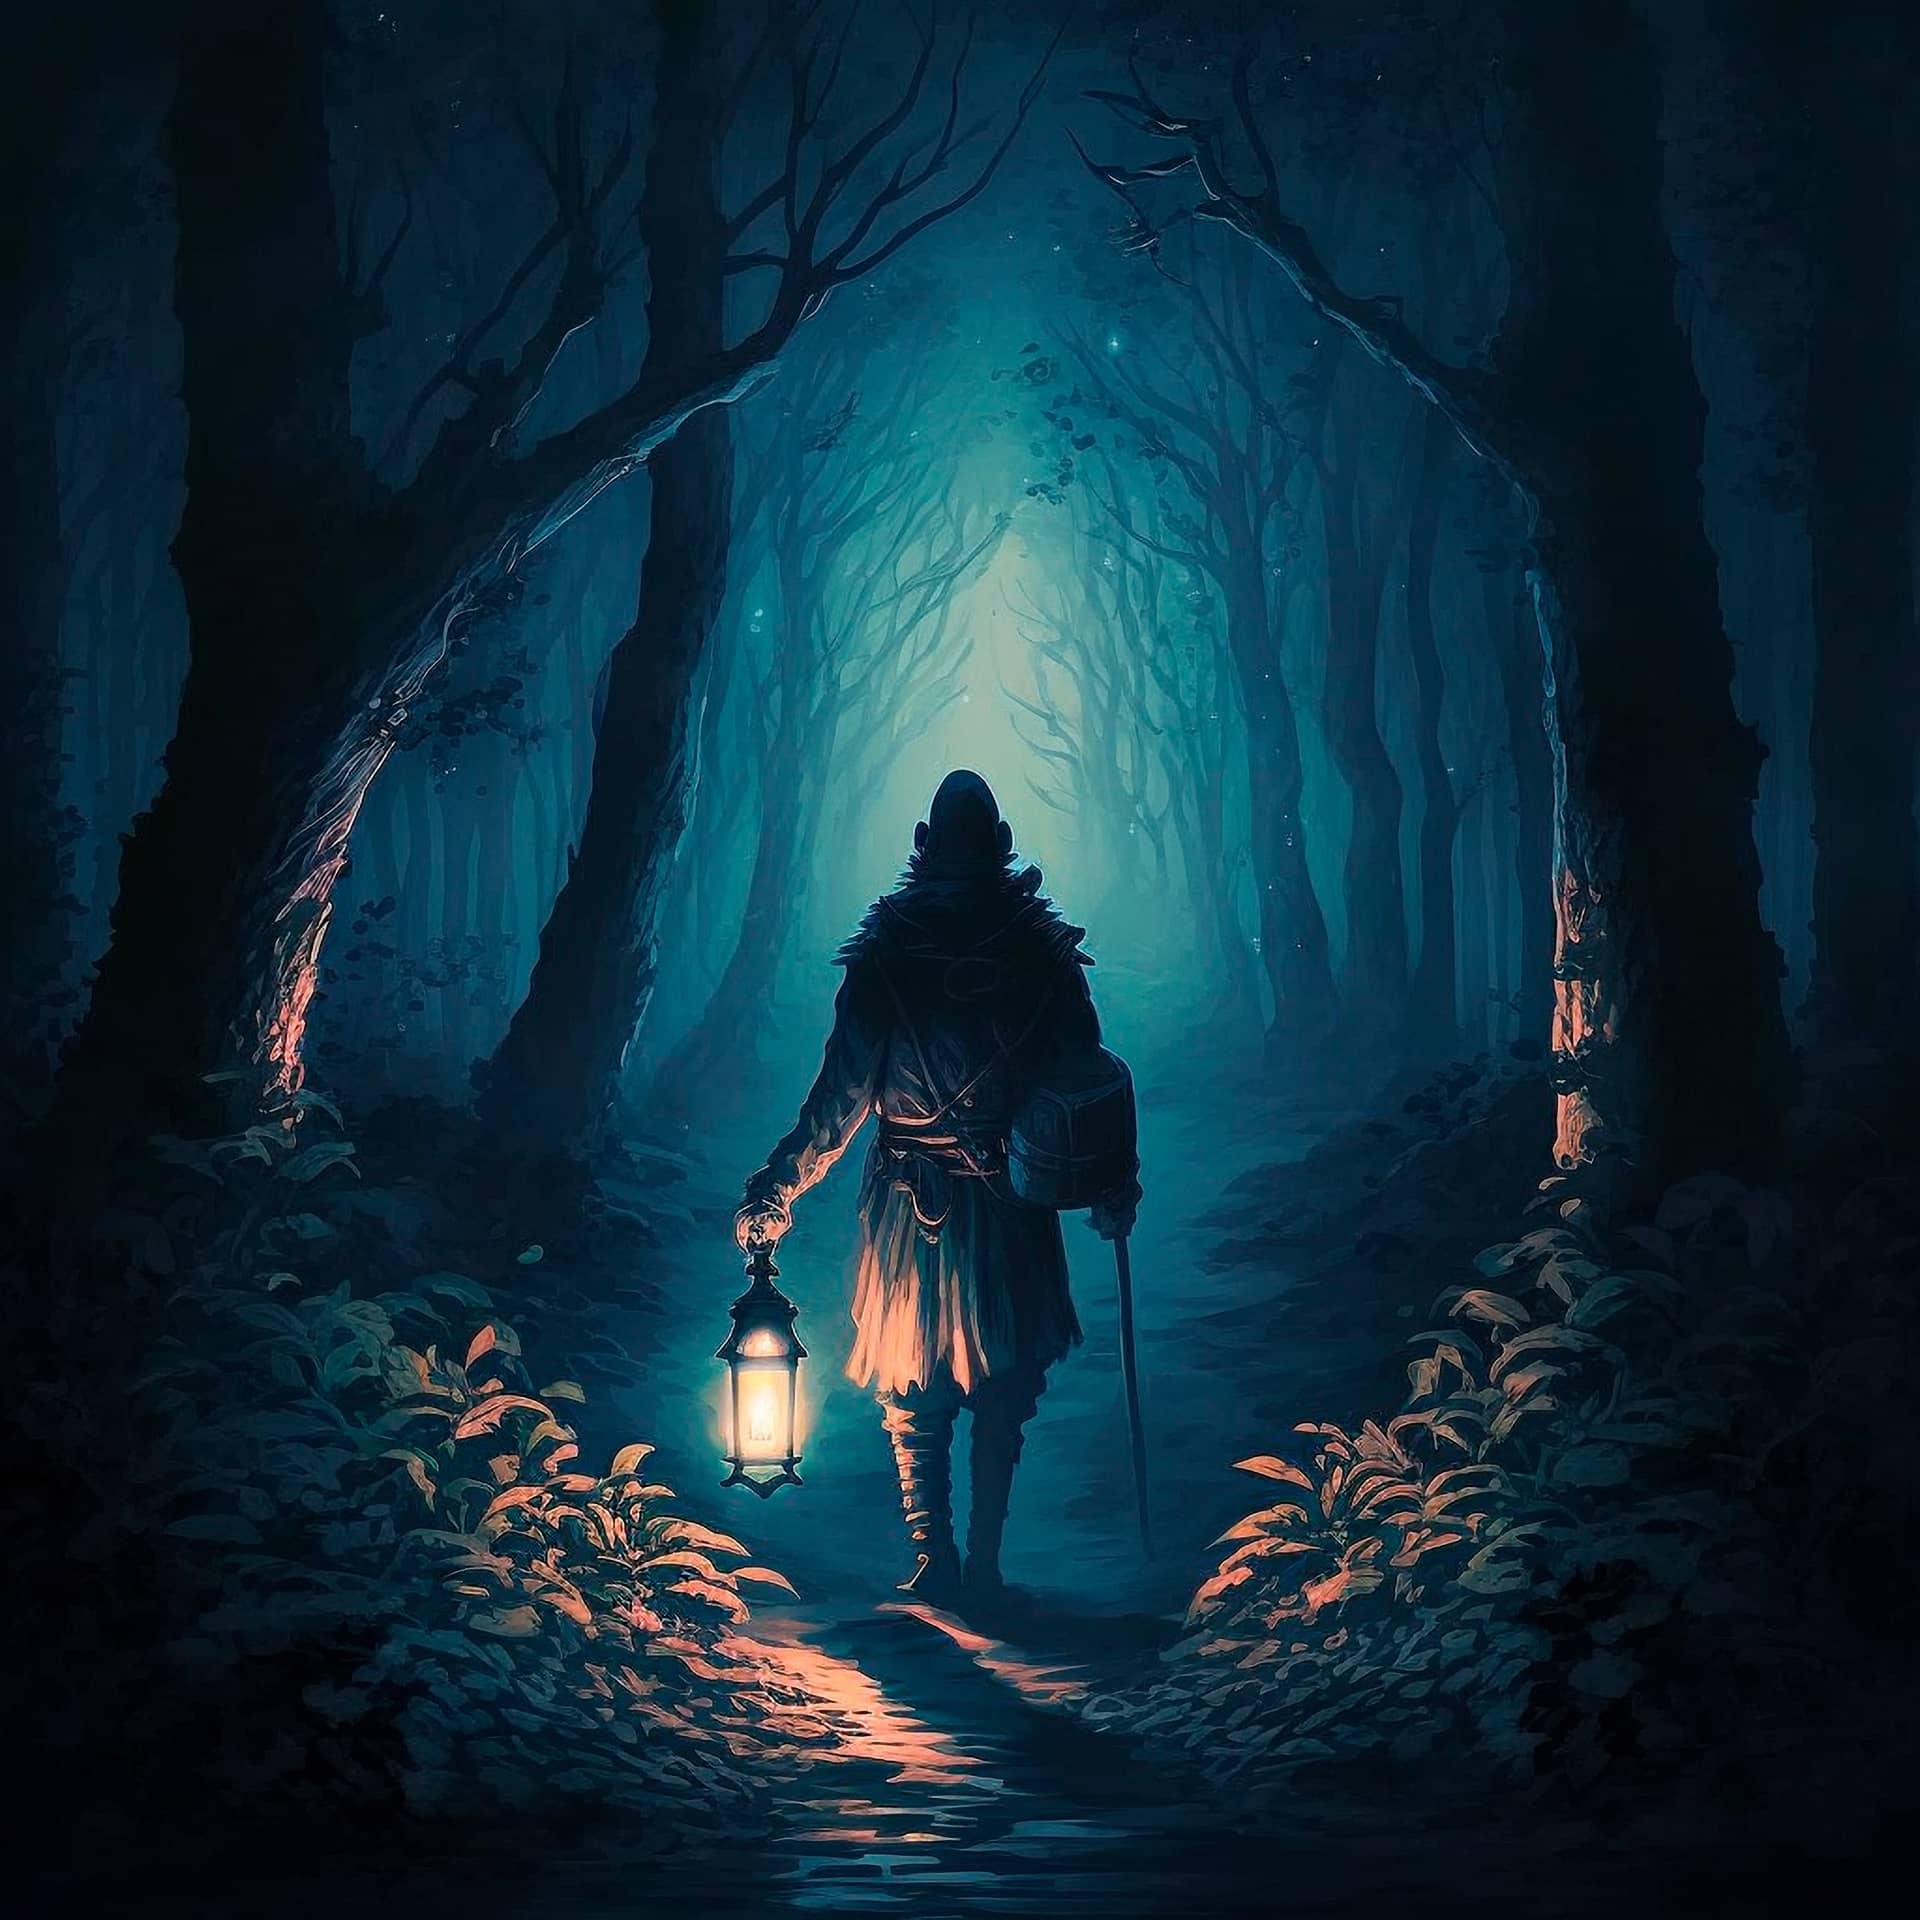 Man walks night lighting his way with lamp image